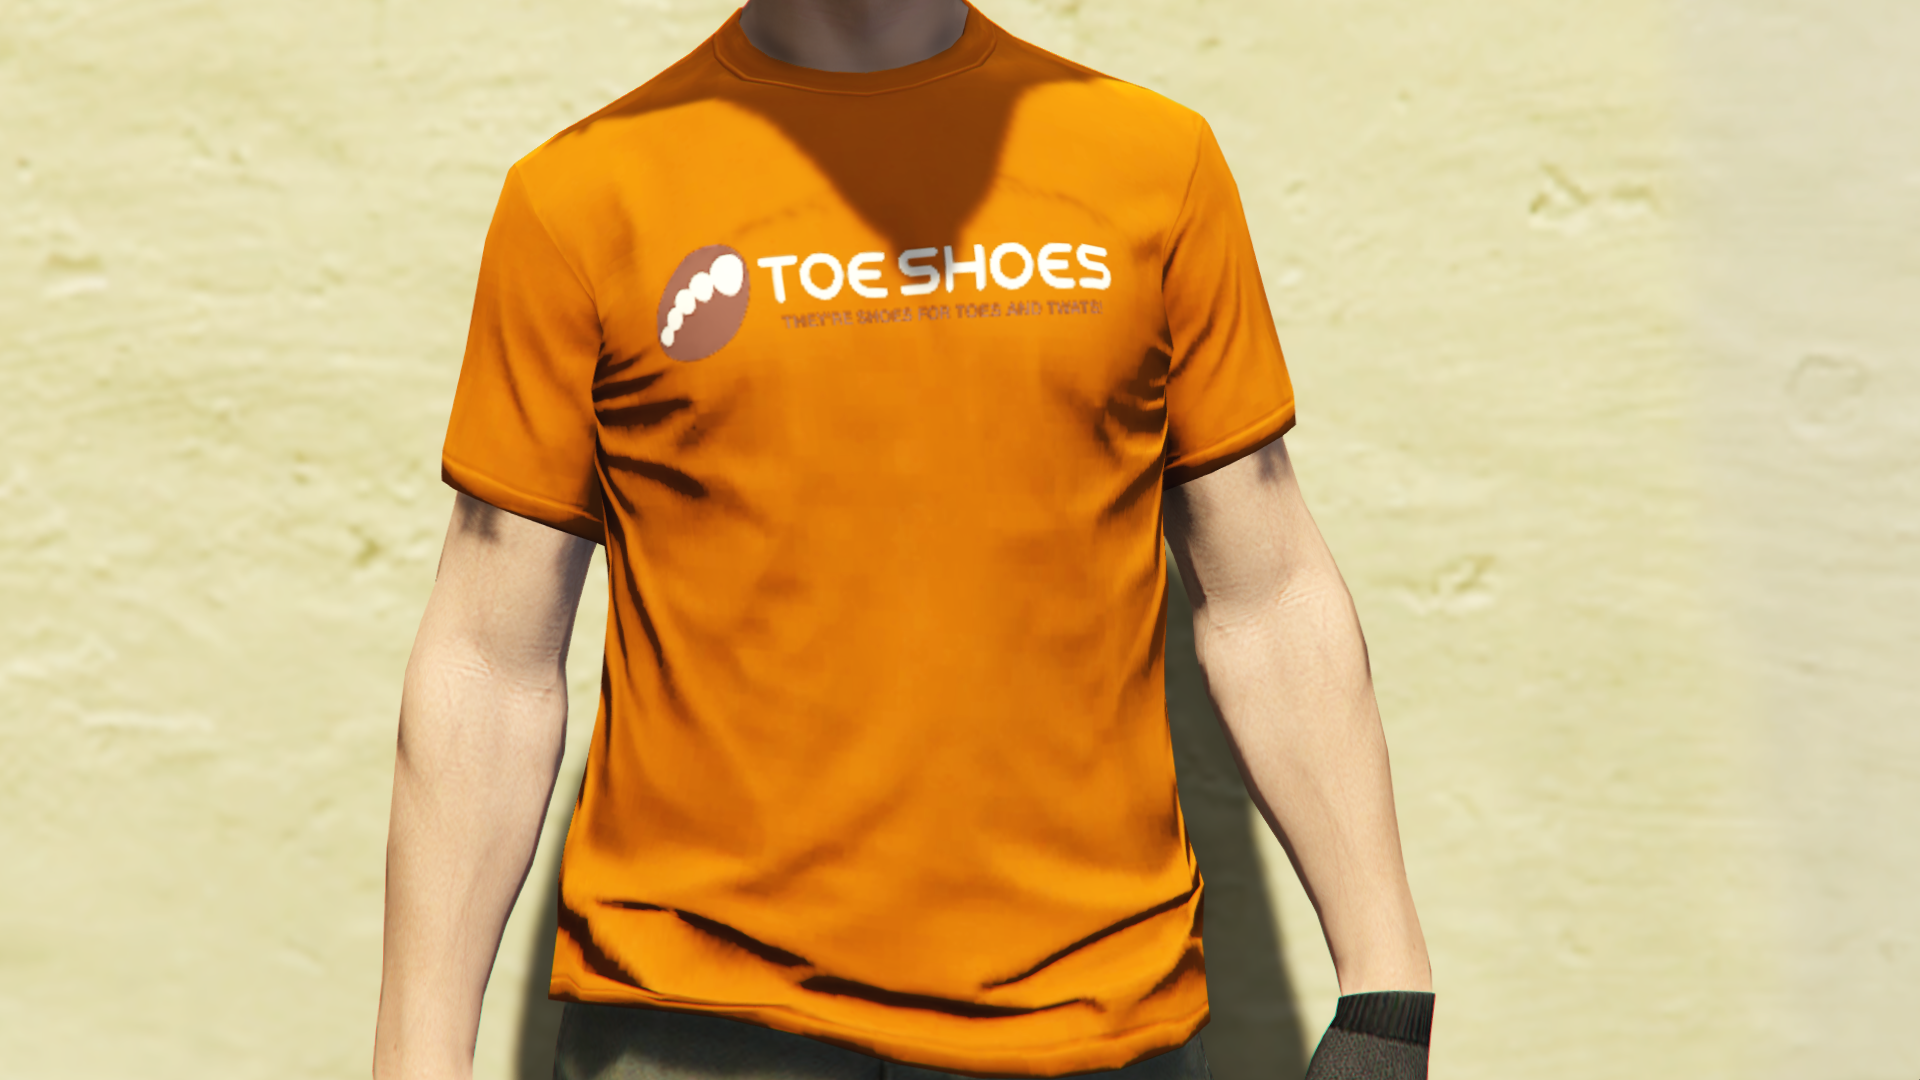 Toe Shoes T Shirt Gta Wiki Fandom